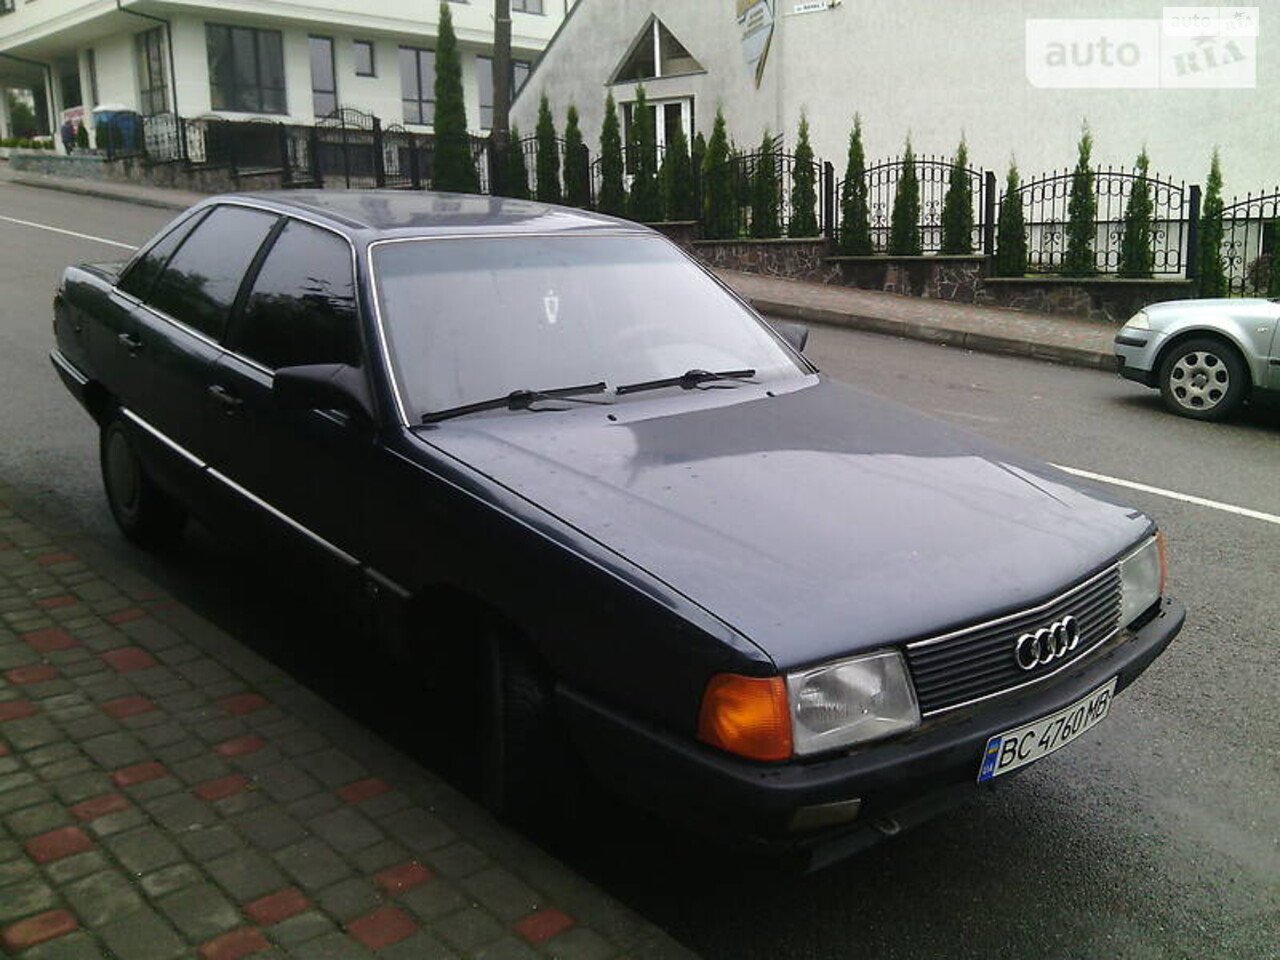 Audi 100 1986